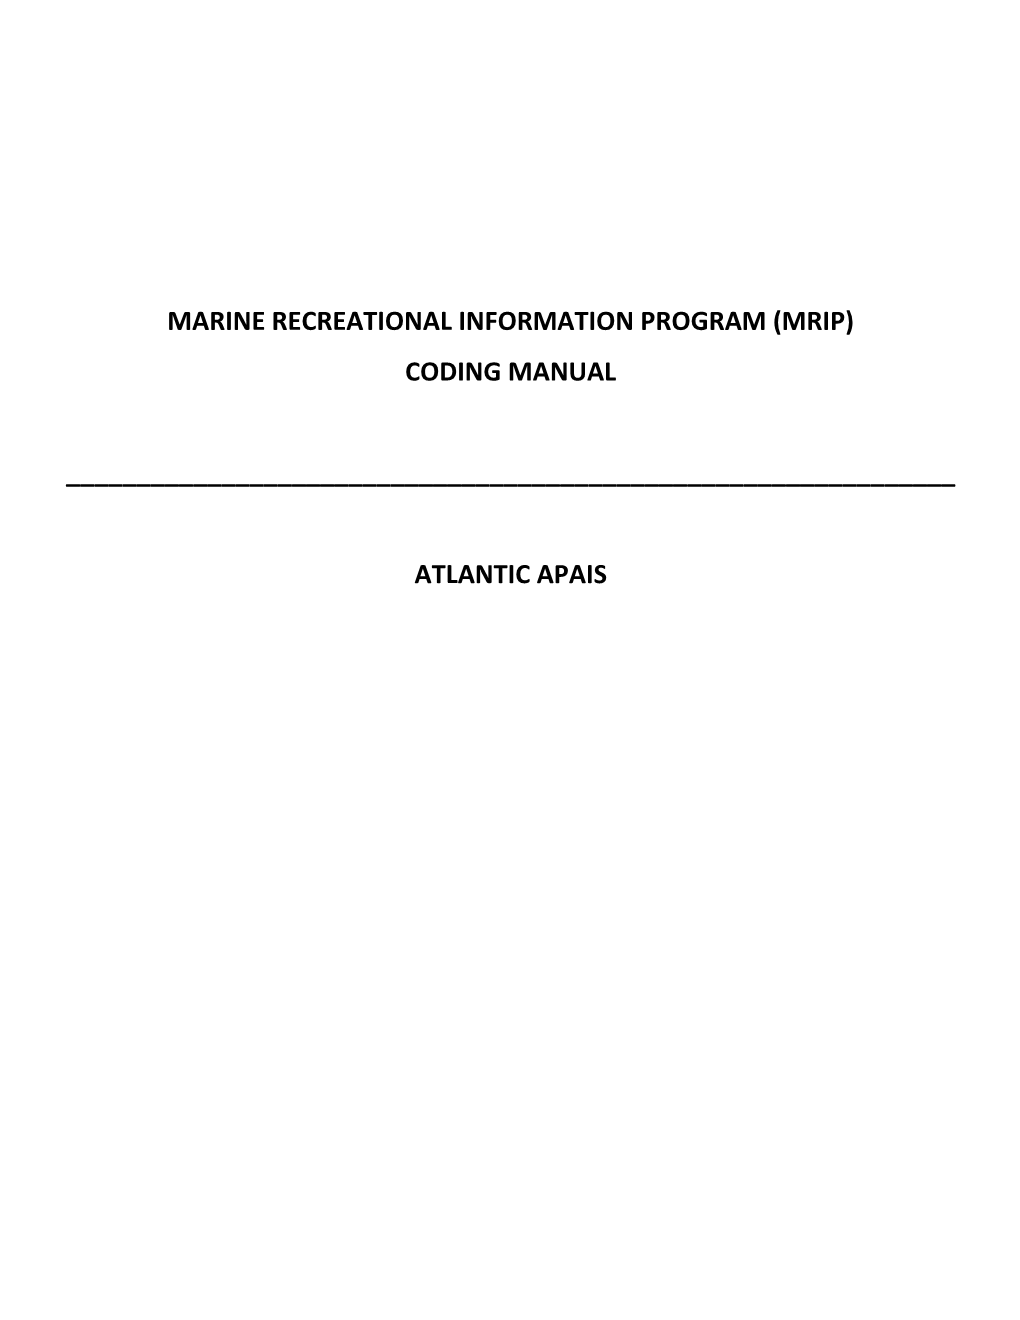 Marine Recreational Information Program (Mrip) Coding Manual